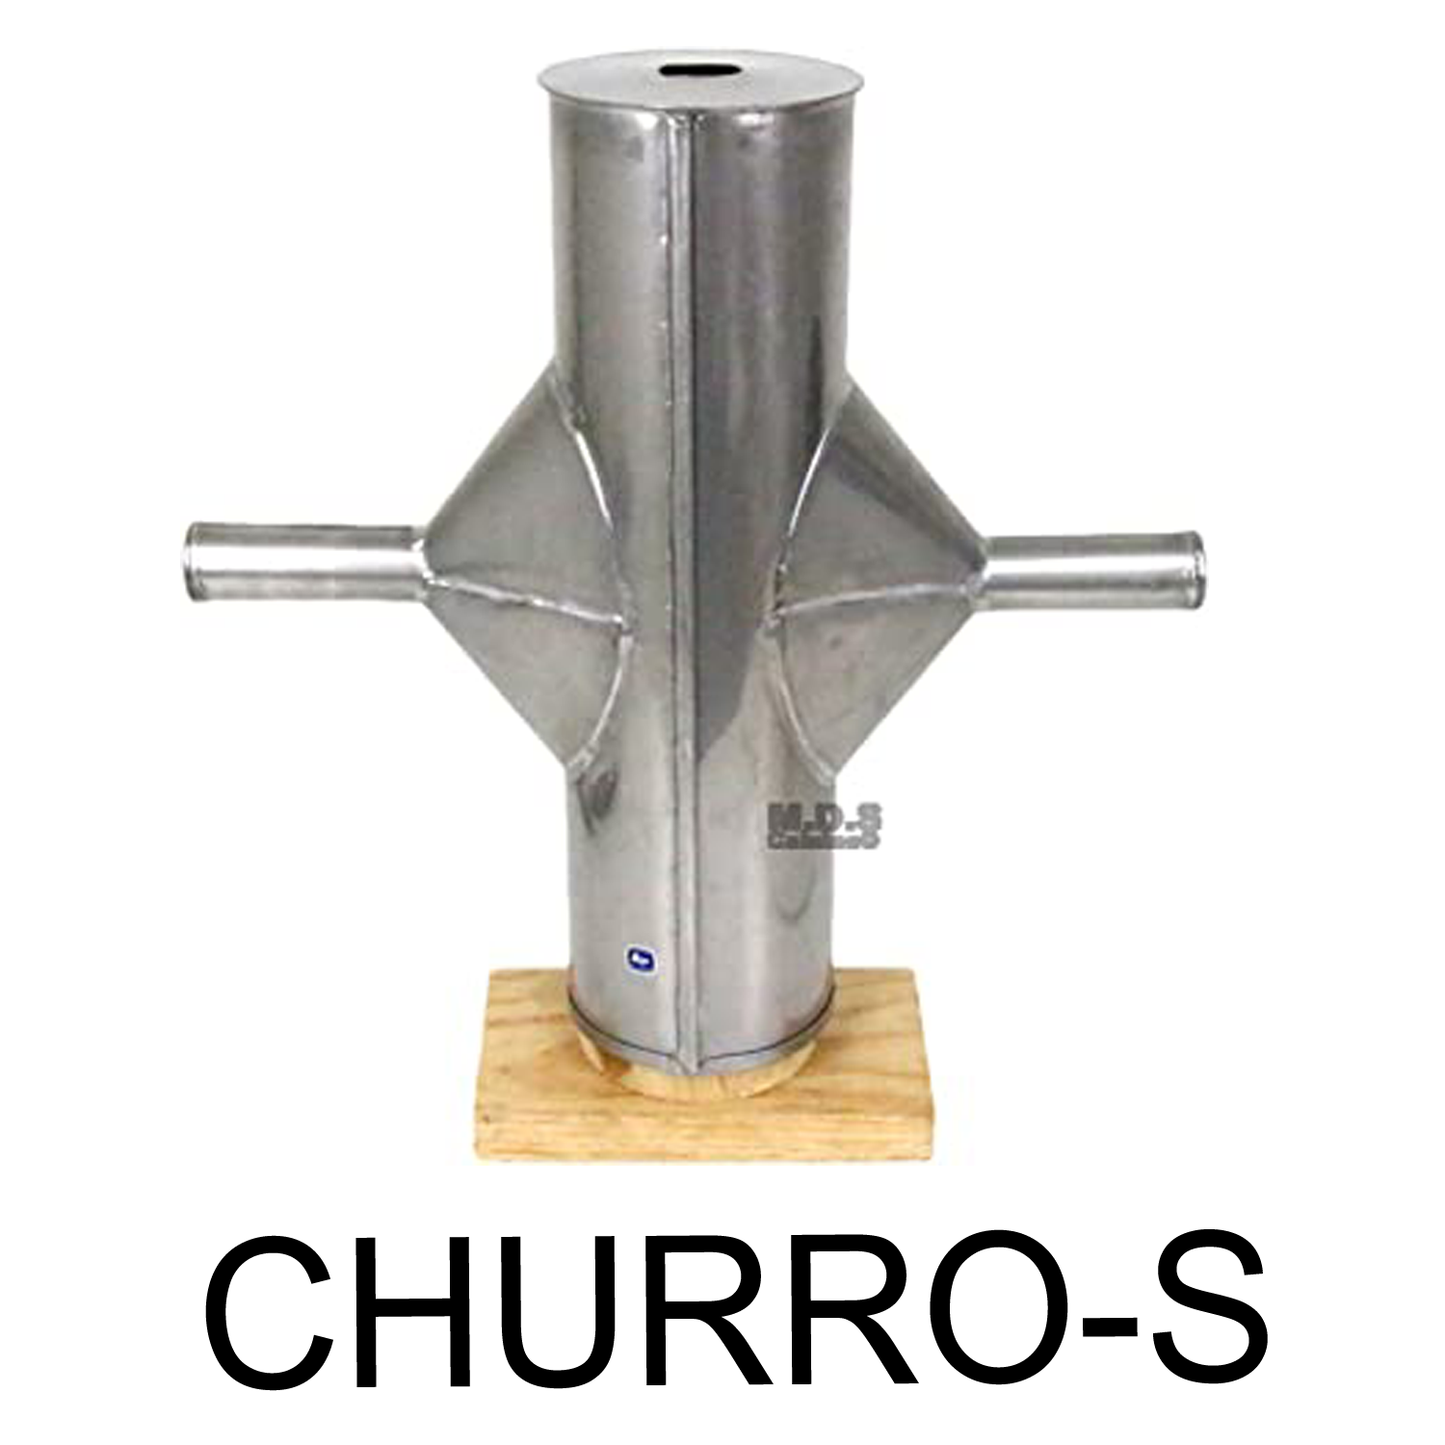 S-Churro Press Pastry Maker Galvanized Steel